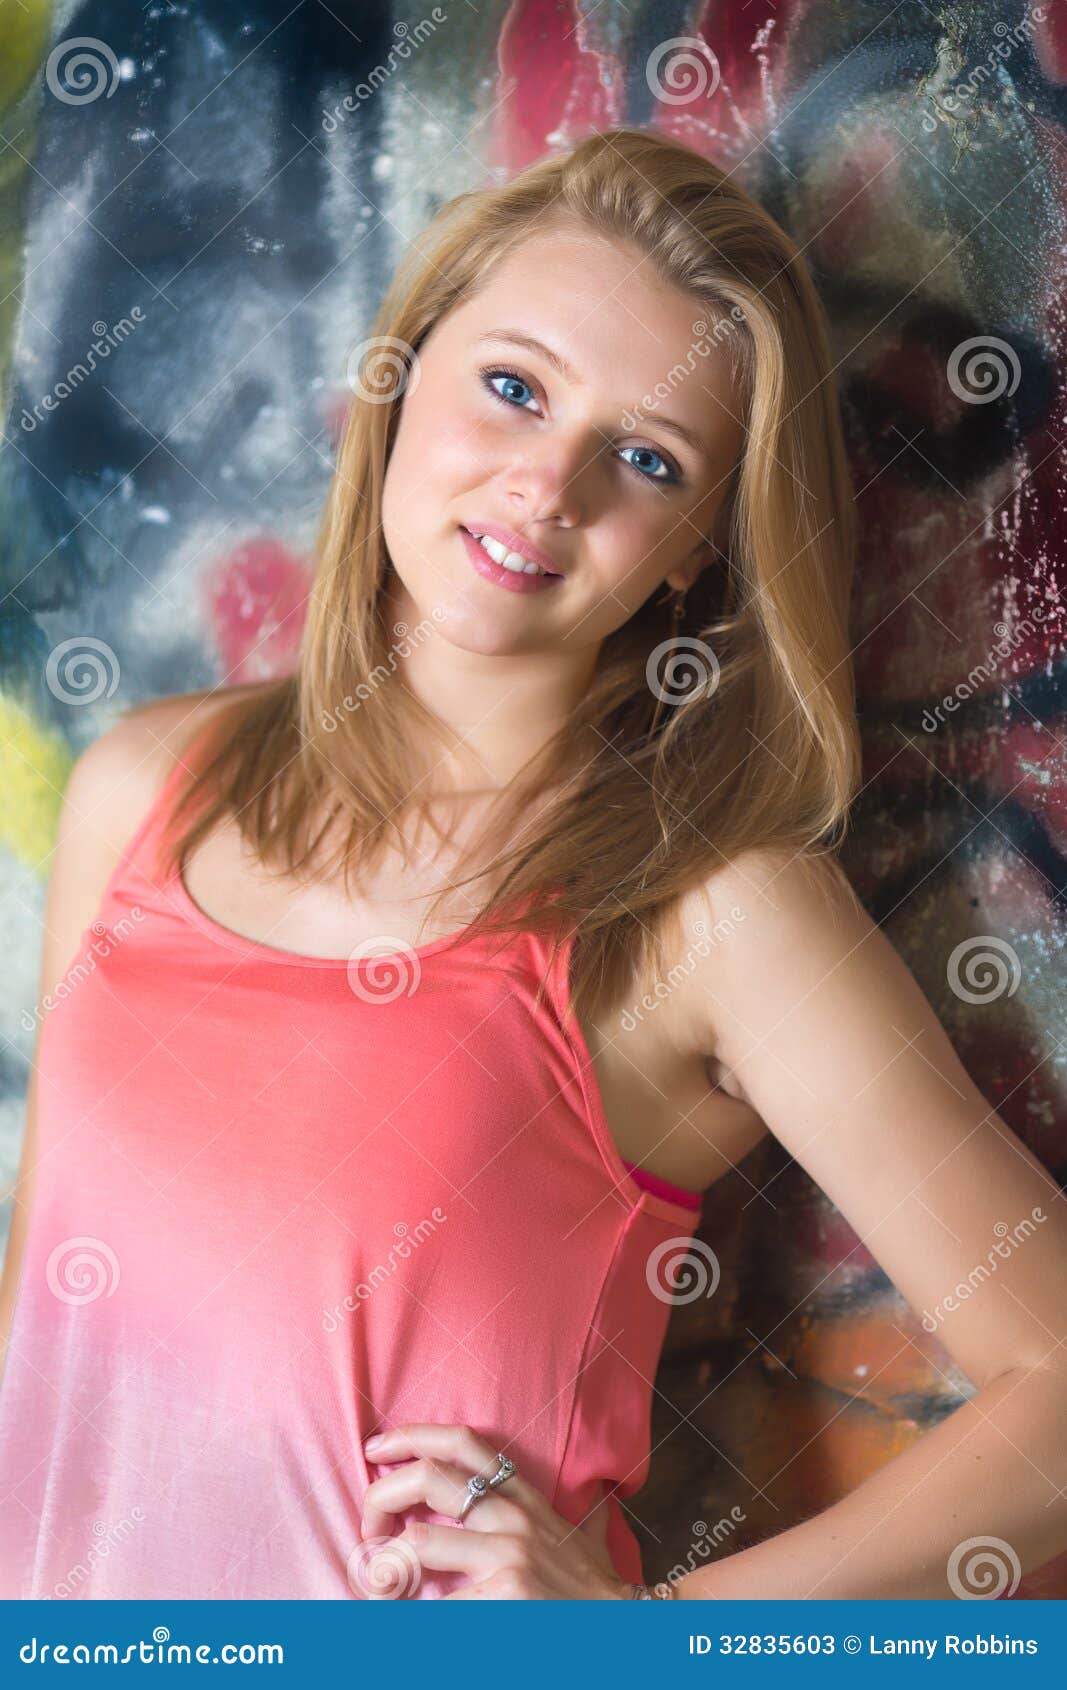 teenage-girl-graffiti-wall-background-cute-standing-front-32835603.jpg